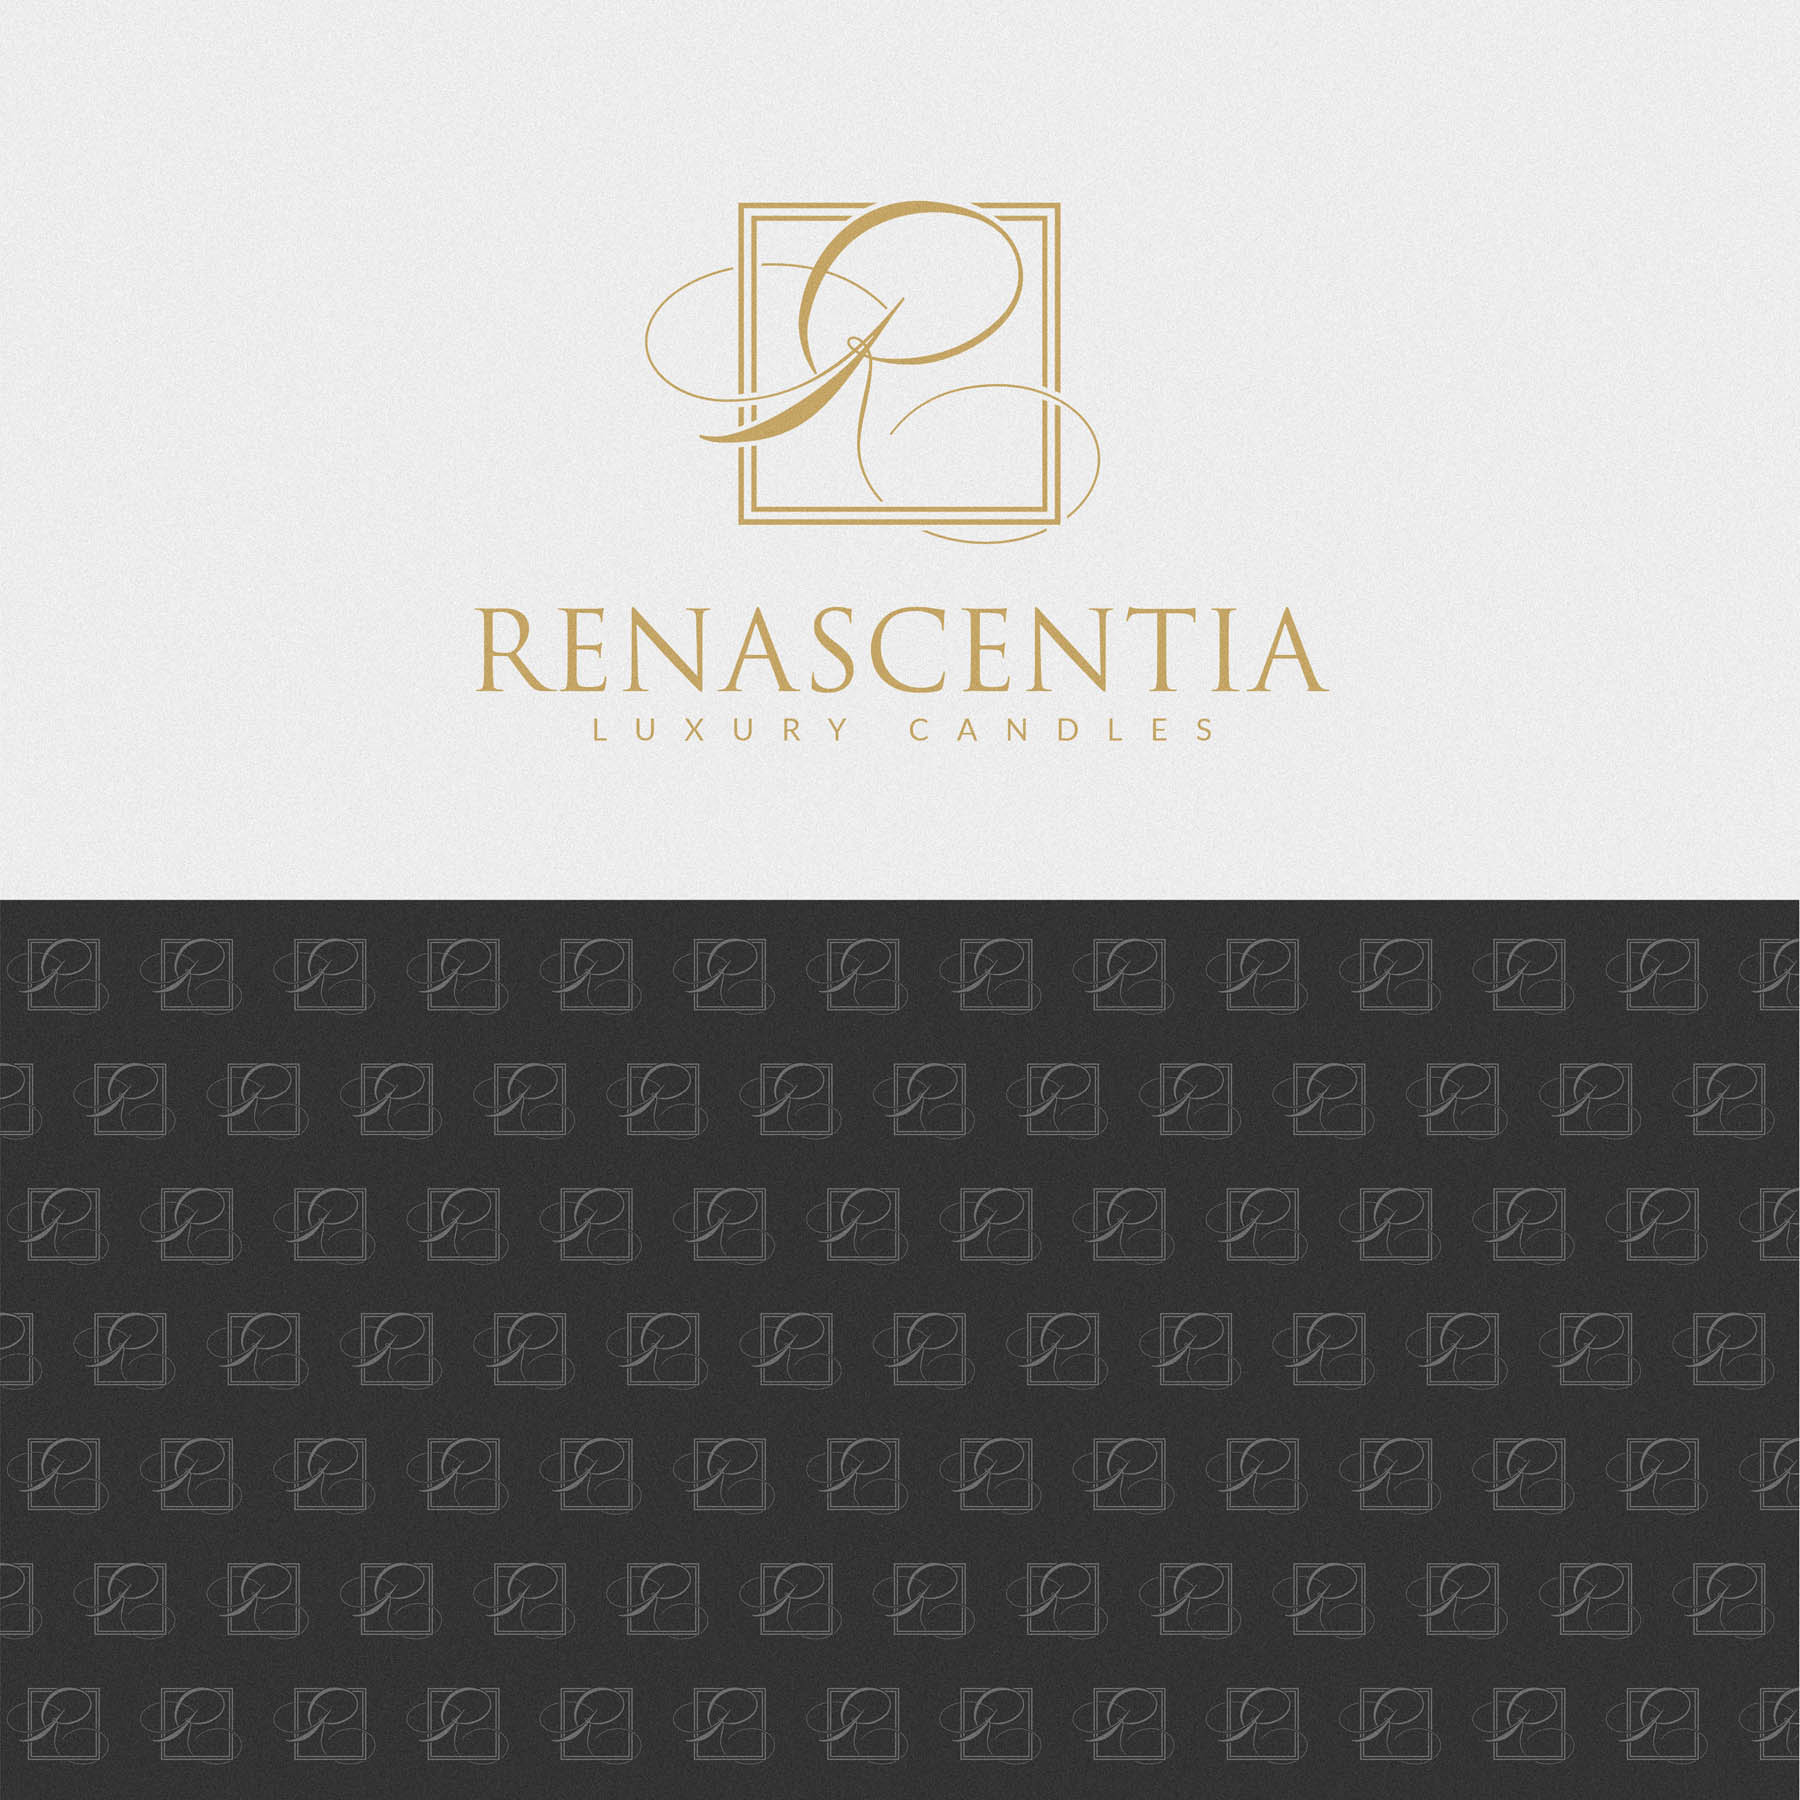 Renascentia luxury candle brand identity logo design london9